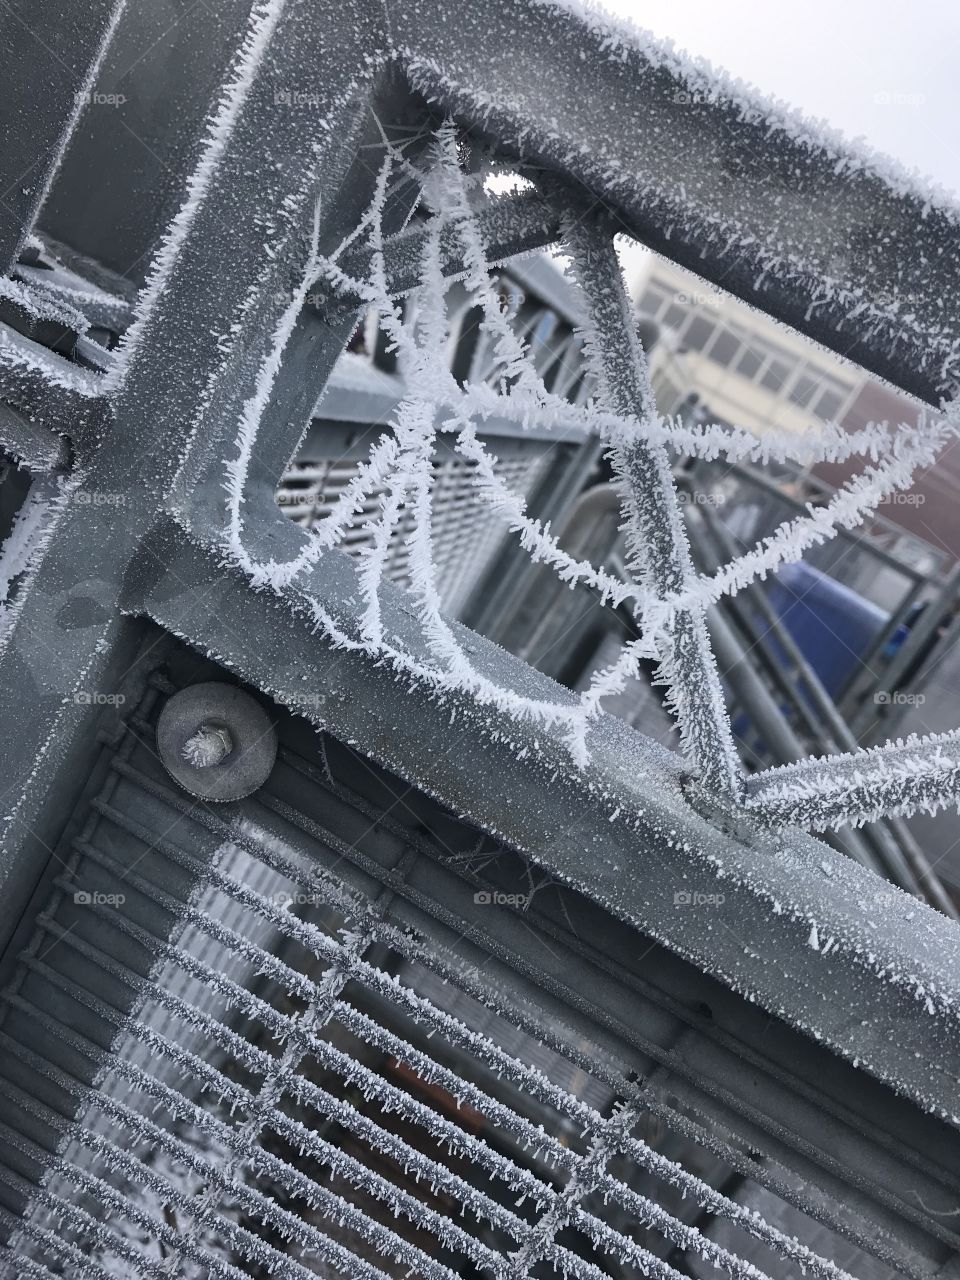 Frozen spider webs in winter. Very trippy. Very ‘cool’